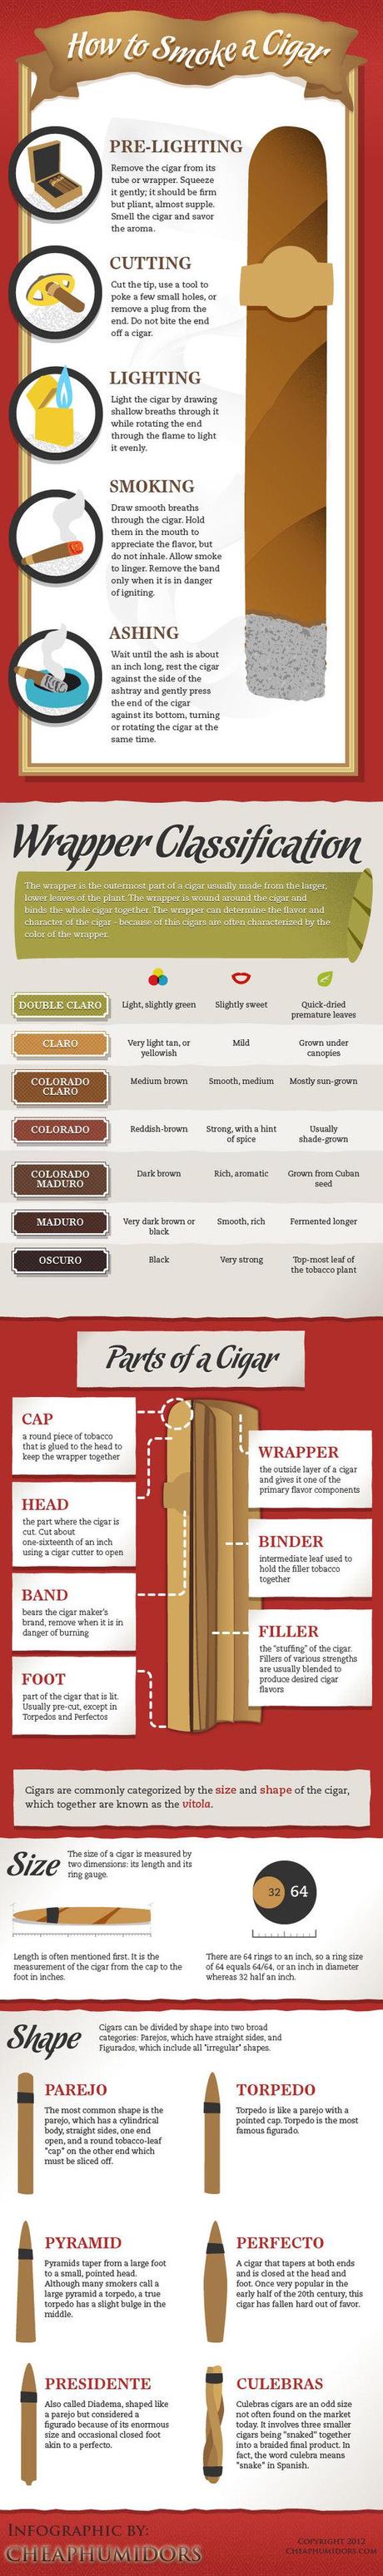 Cigar Smoking Infographic